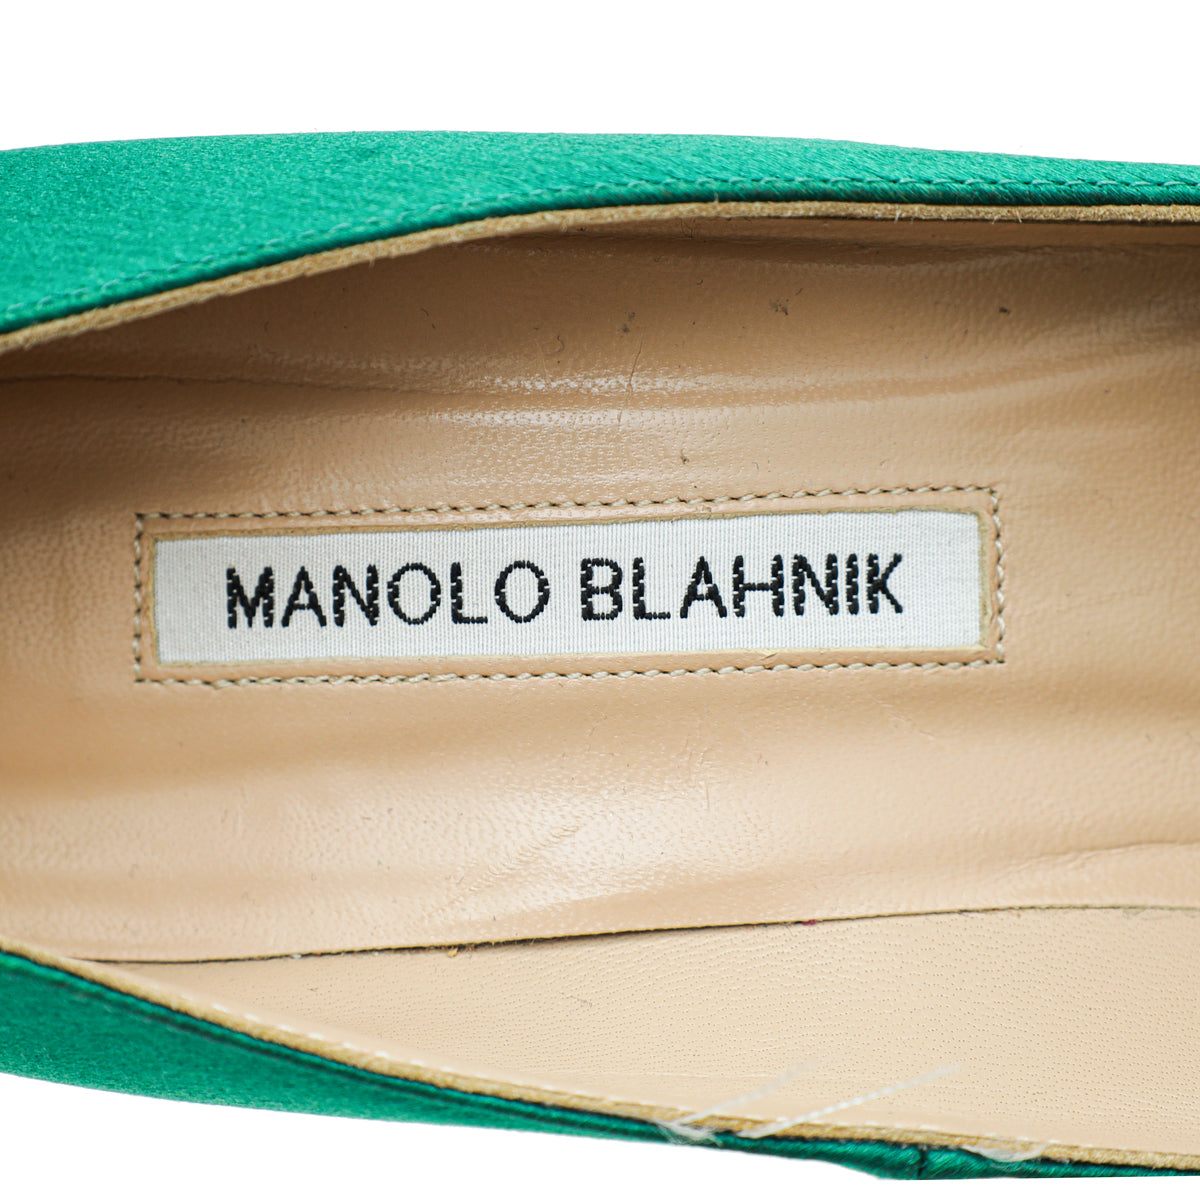 Manolo Blahnik Green Satin Borlak Pumps 39.5